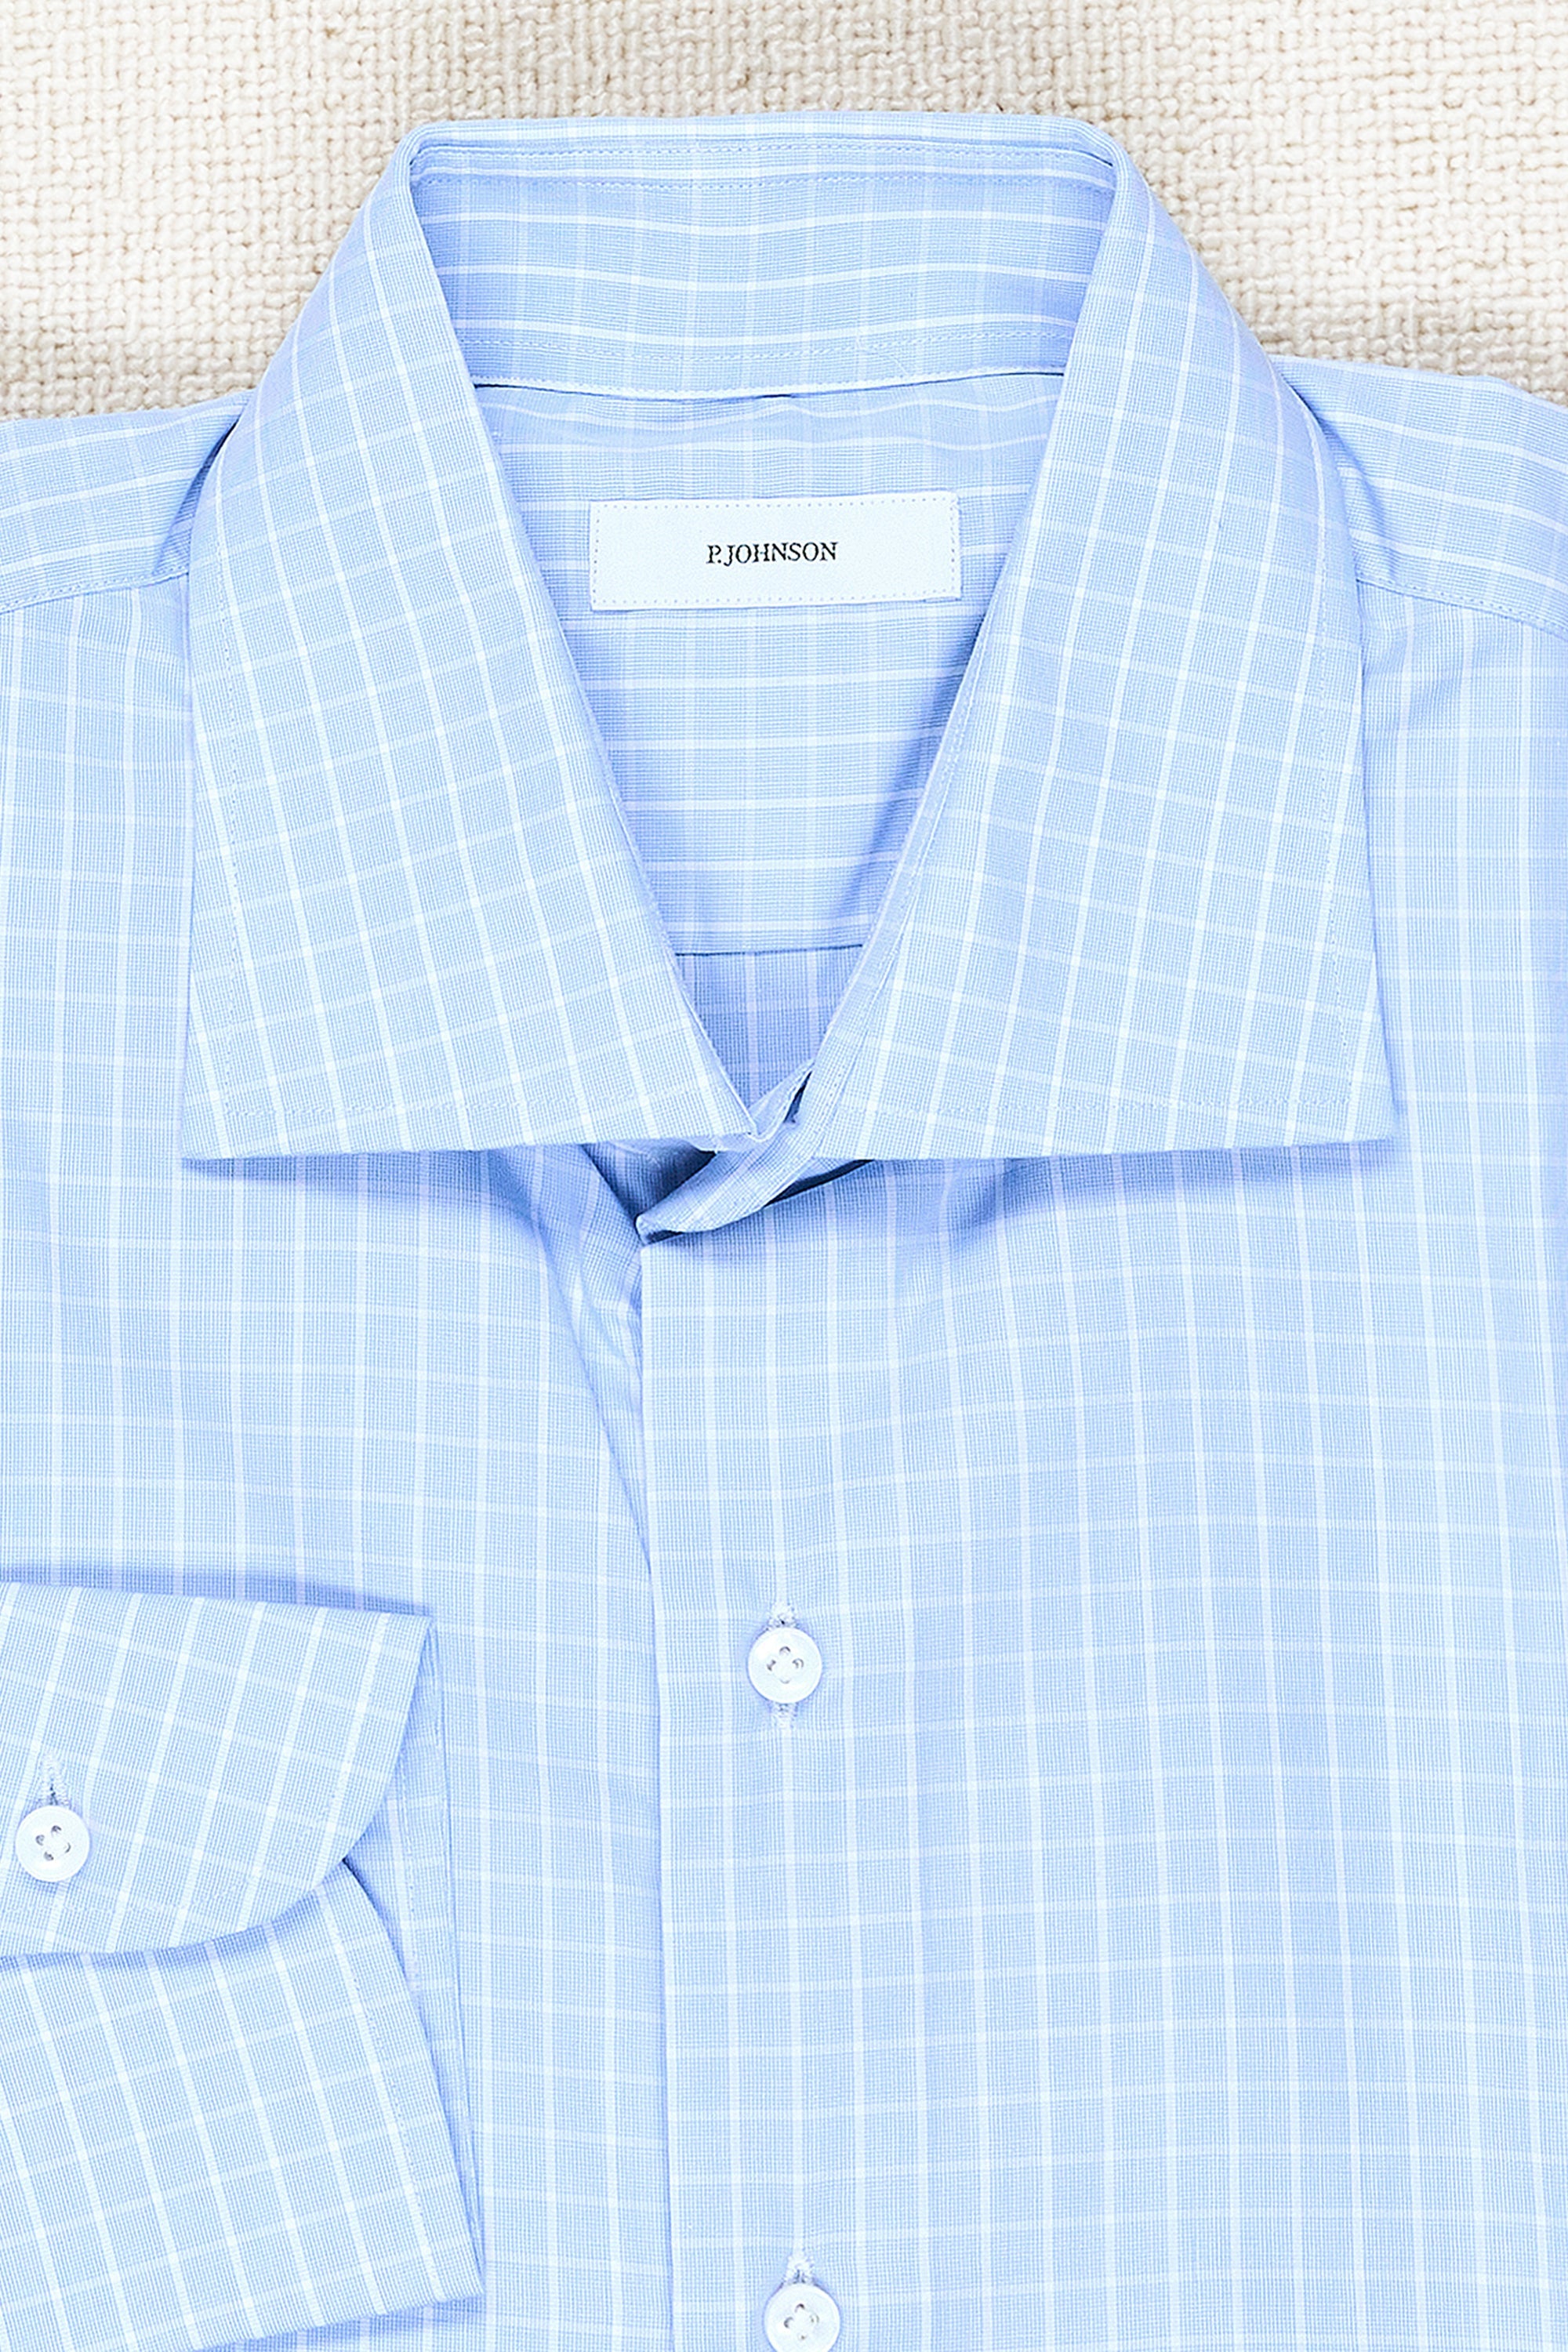 P. Johnson Blue/White Check Cotton Spread Collar Shirt